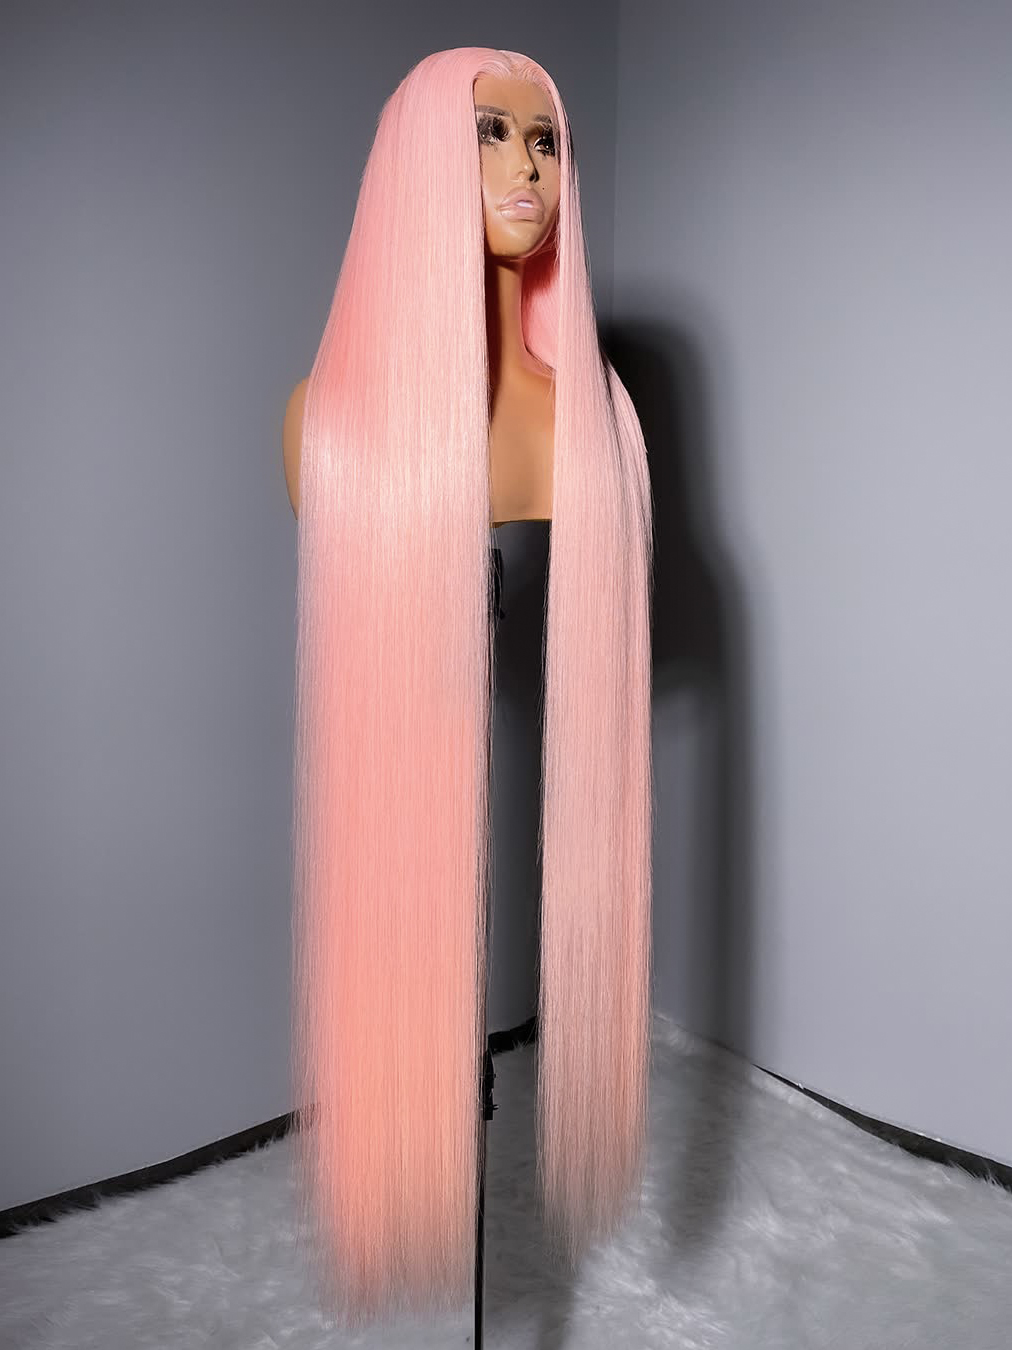 Keswigs virgin human hair HD Full Lace wigs 300 density straight wigs pink color